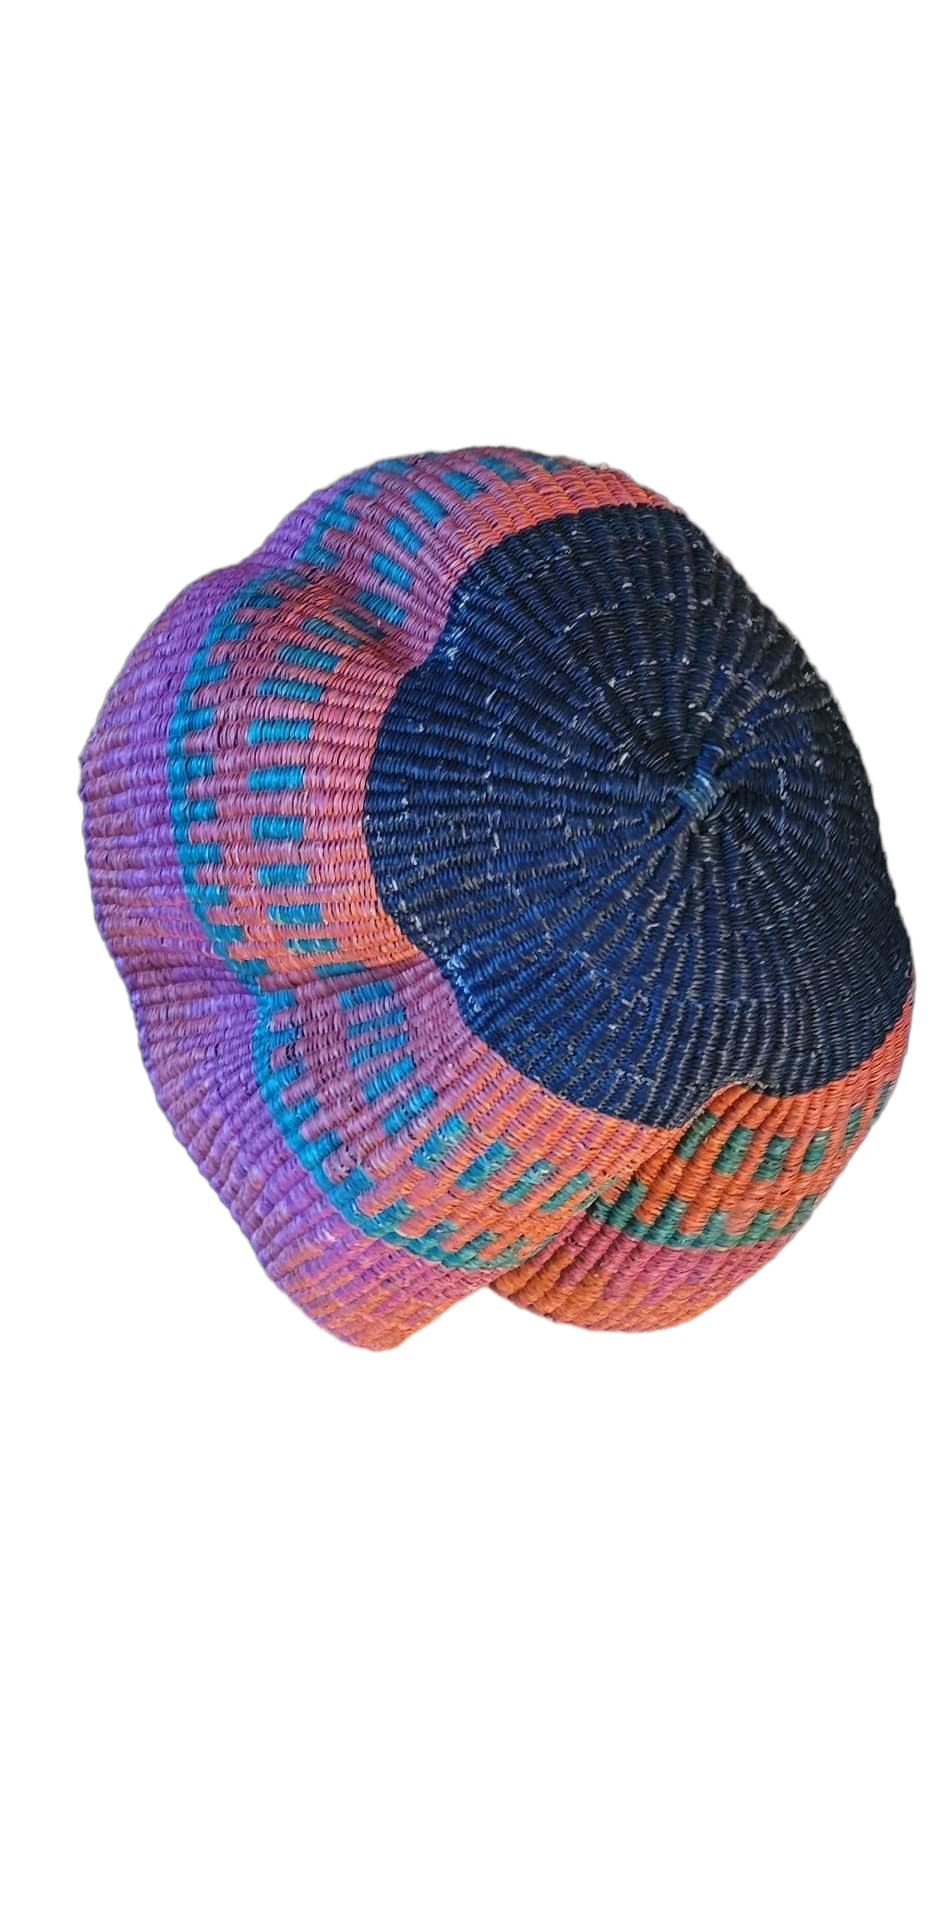 Handmade Woven Basket